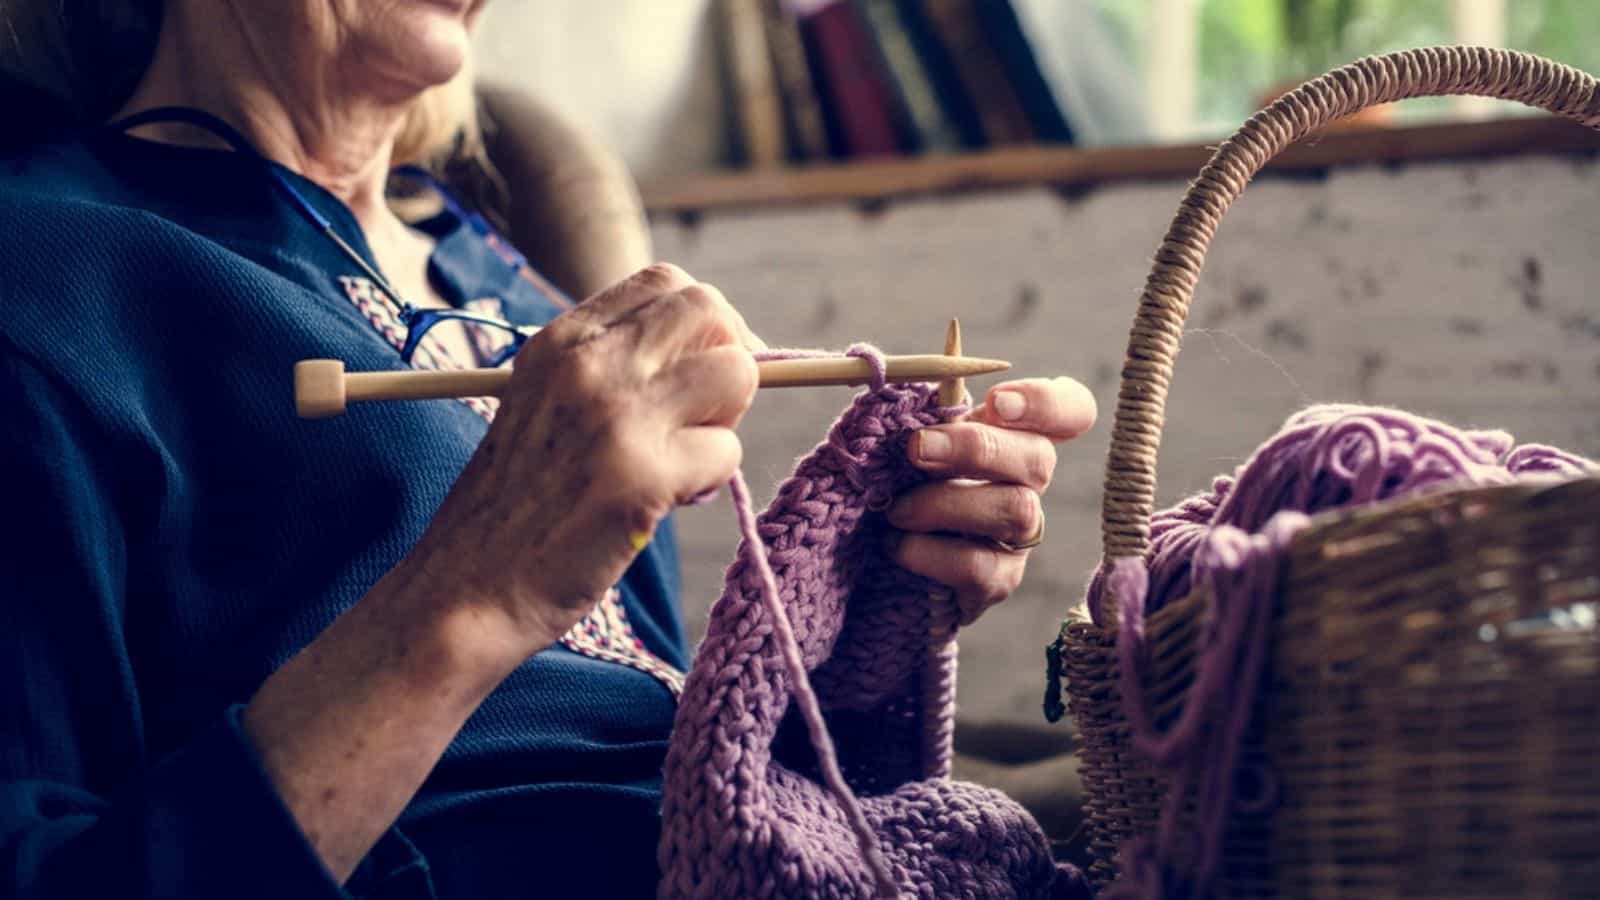 Elderly woman knitting handicraft hobby